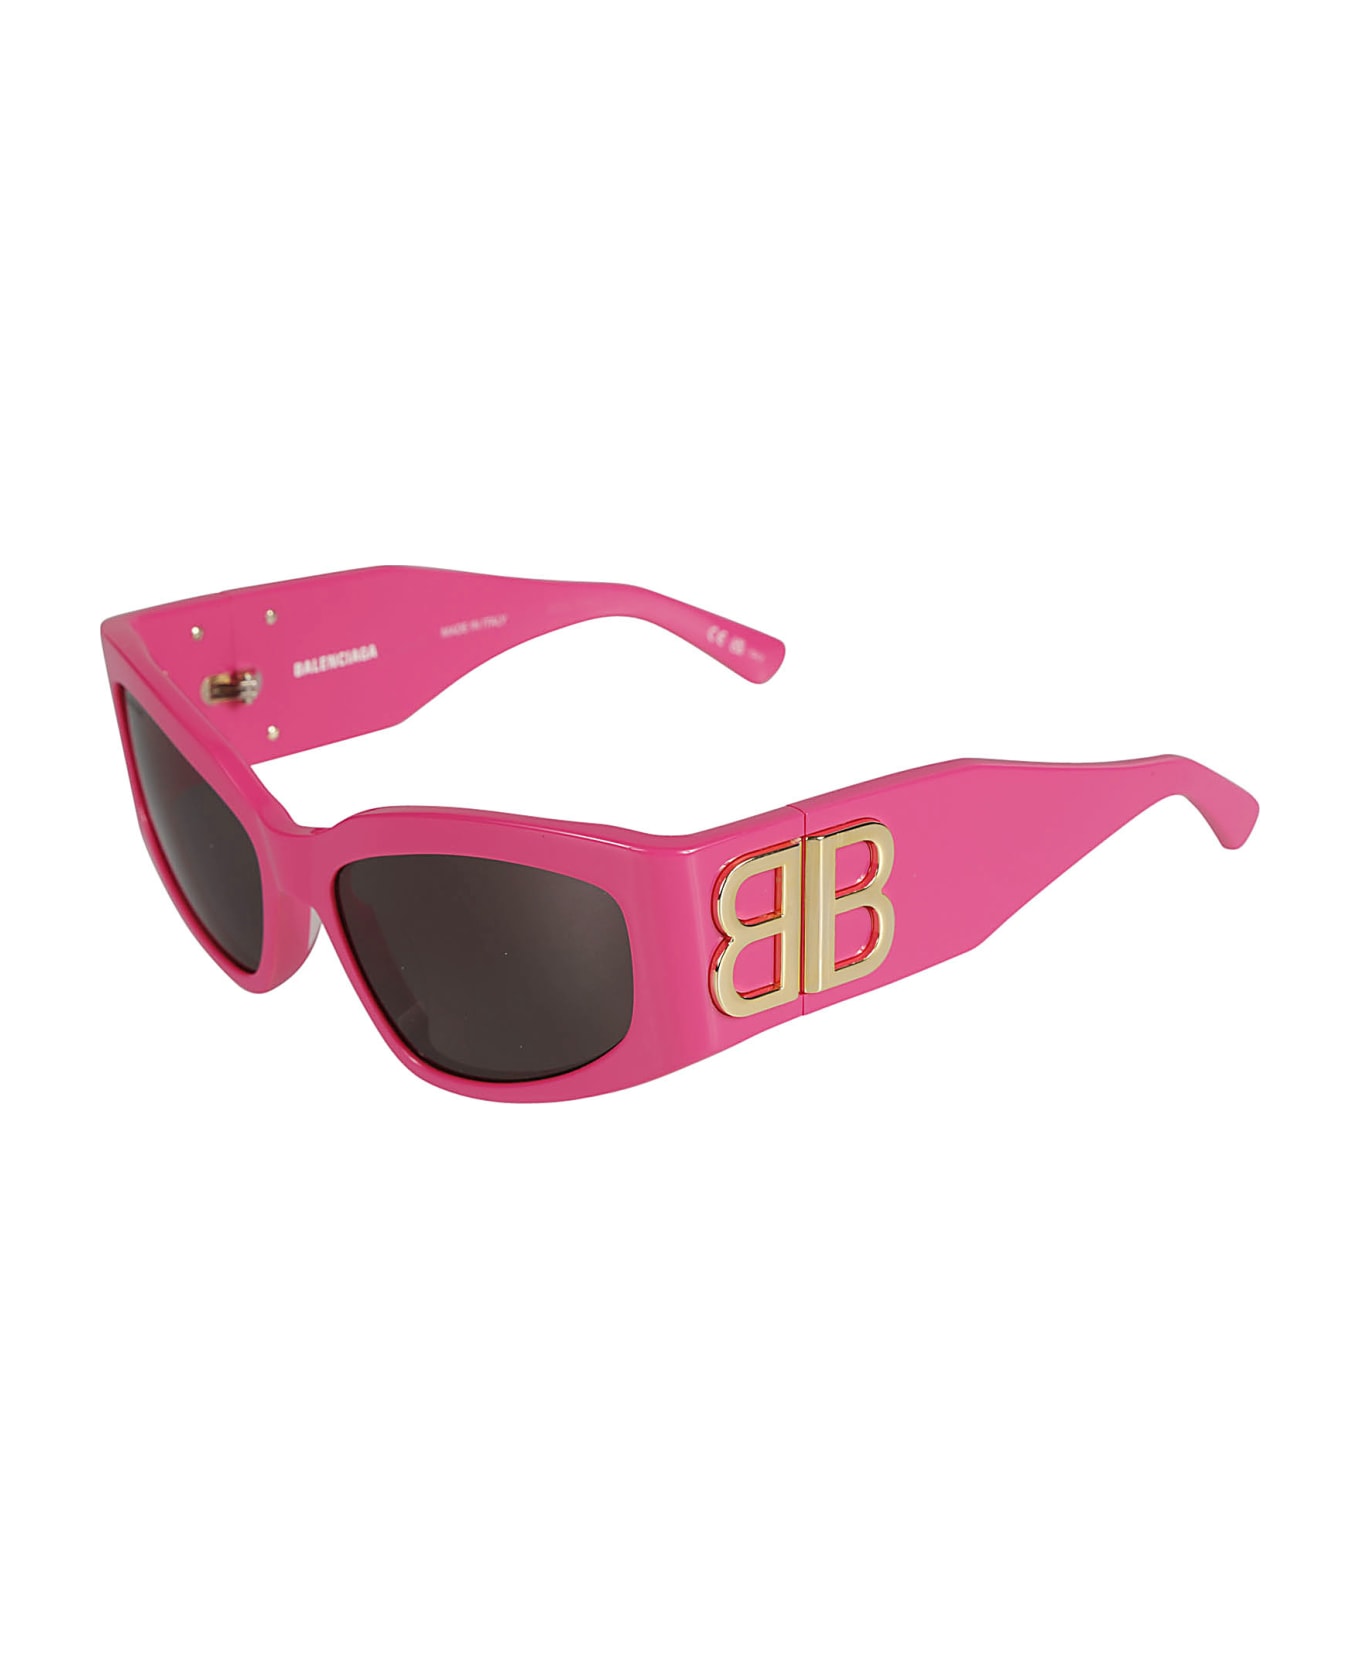 Balenciaga Eyewear Bb0321s Sunglasses - 006 PINK PINK GREY